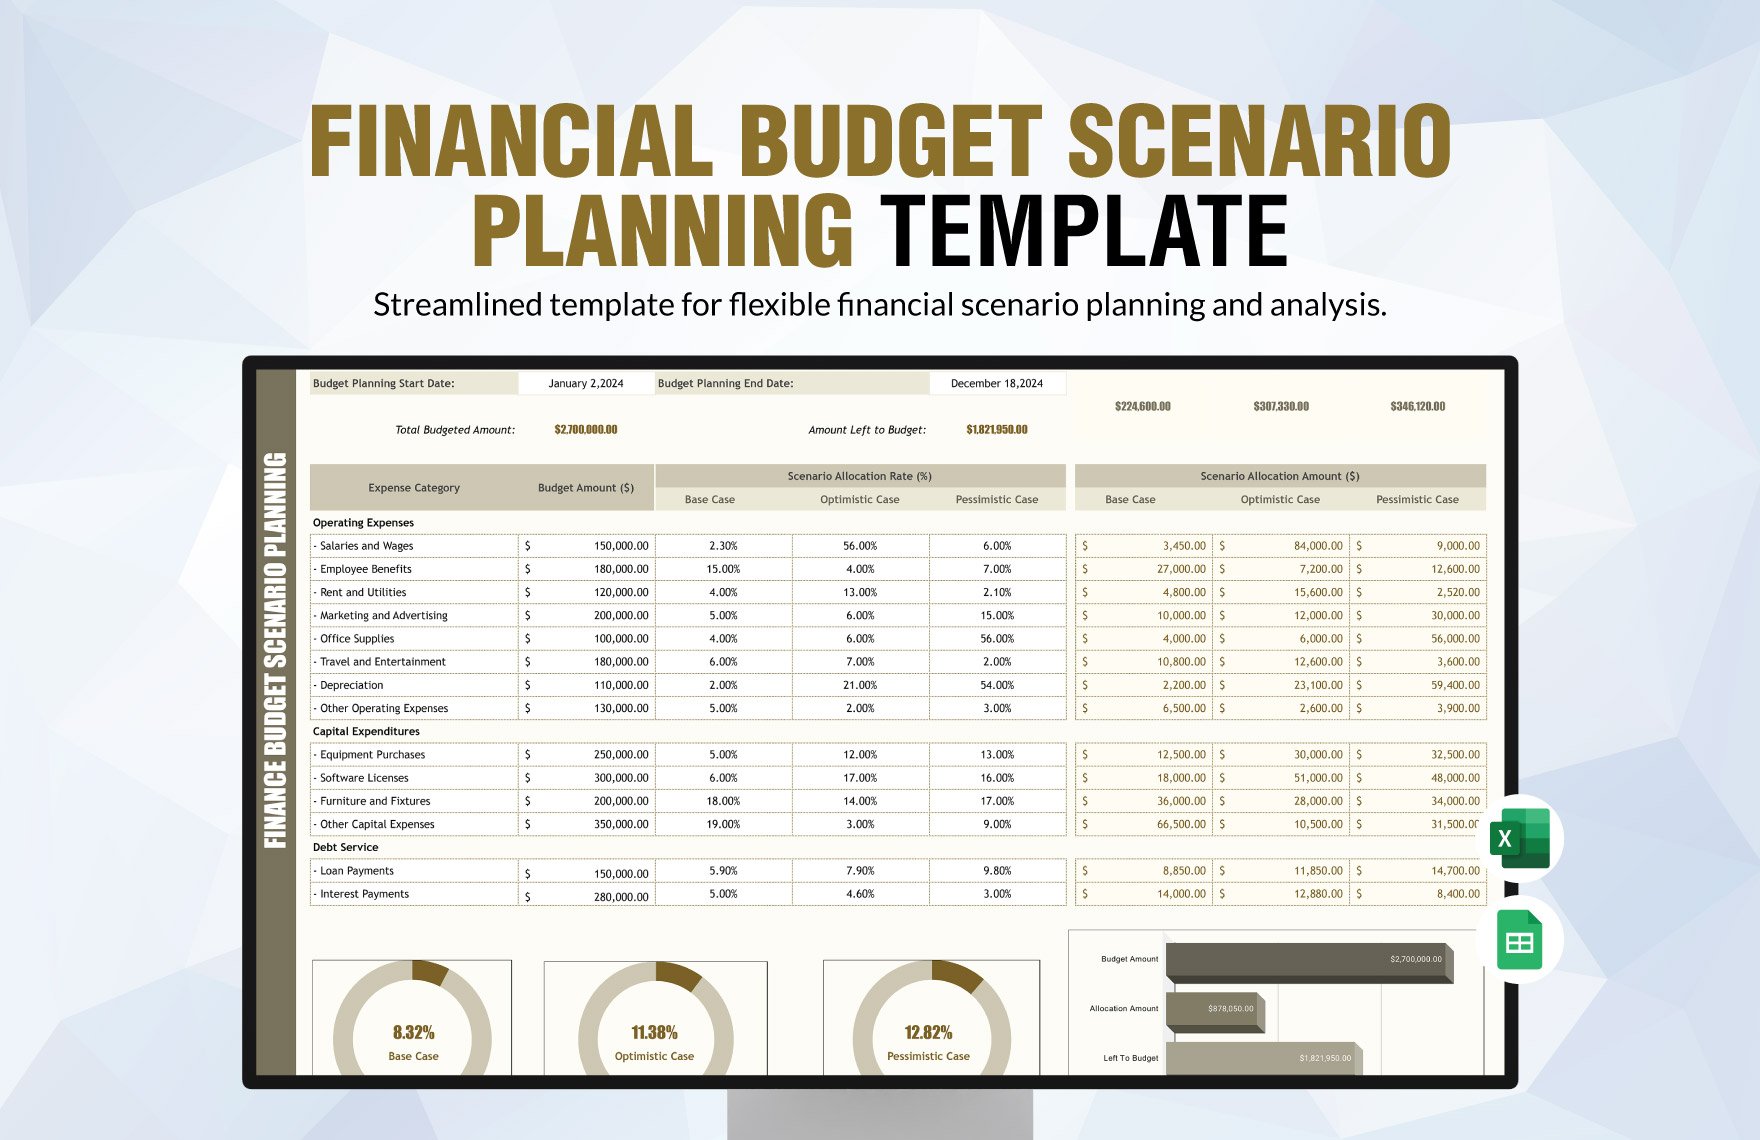 Finance Budget Scenario Planning Template in Excel, Google Sheets